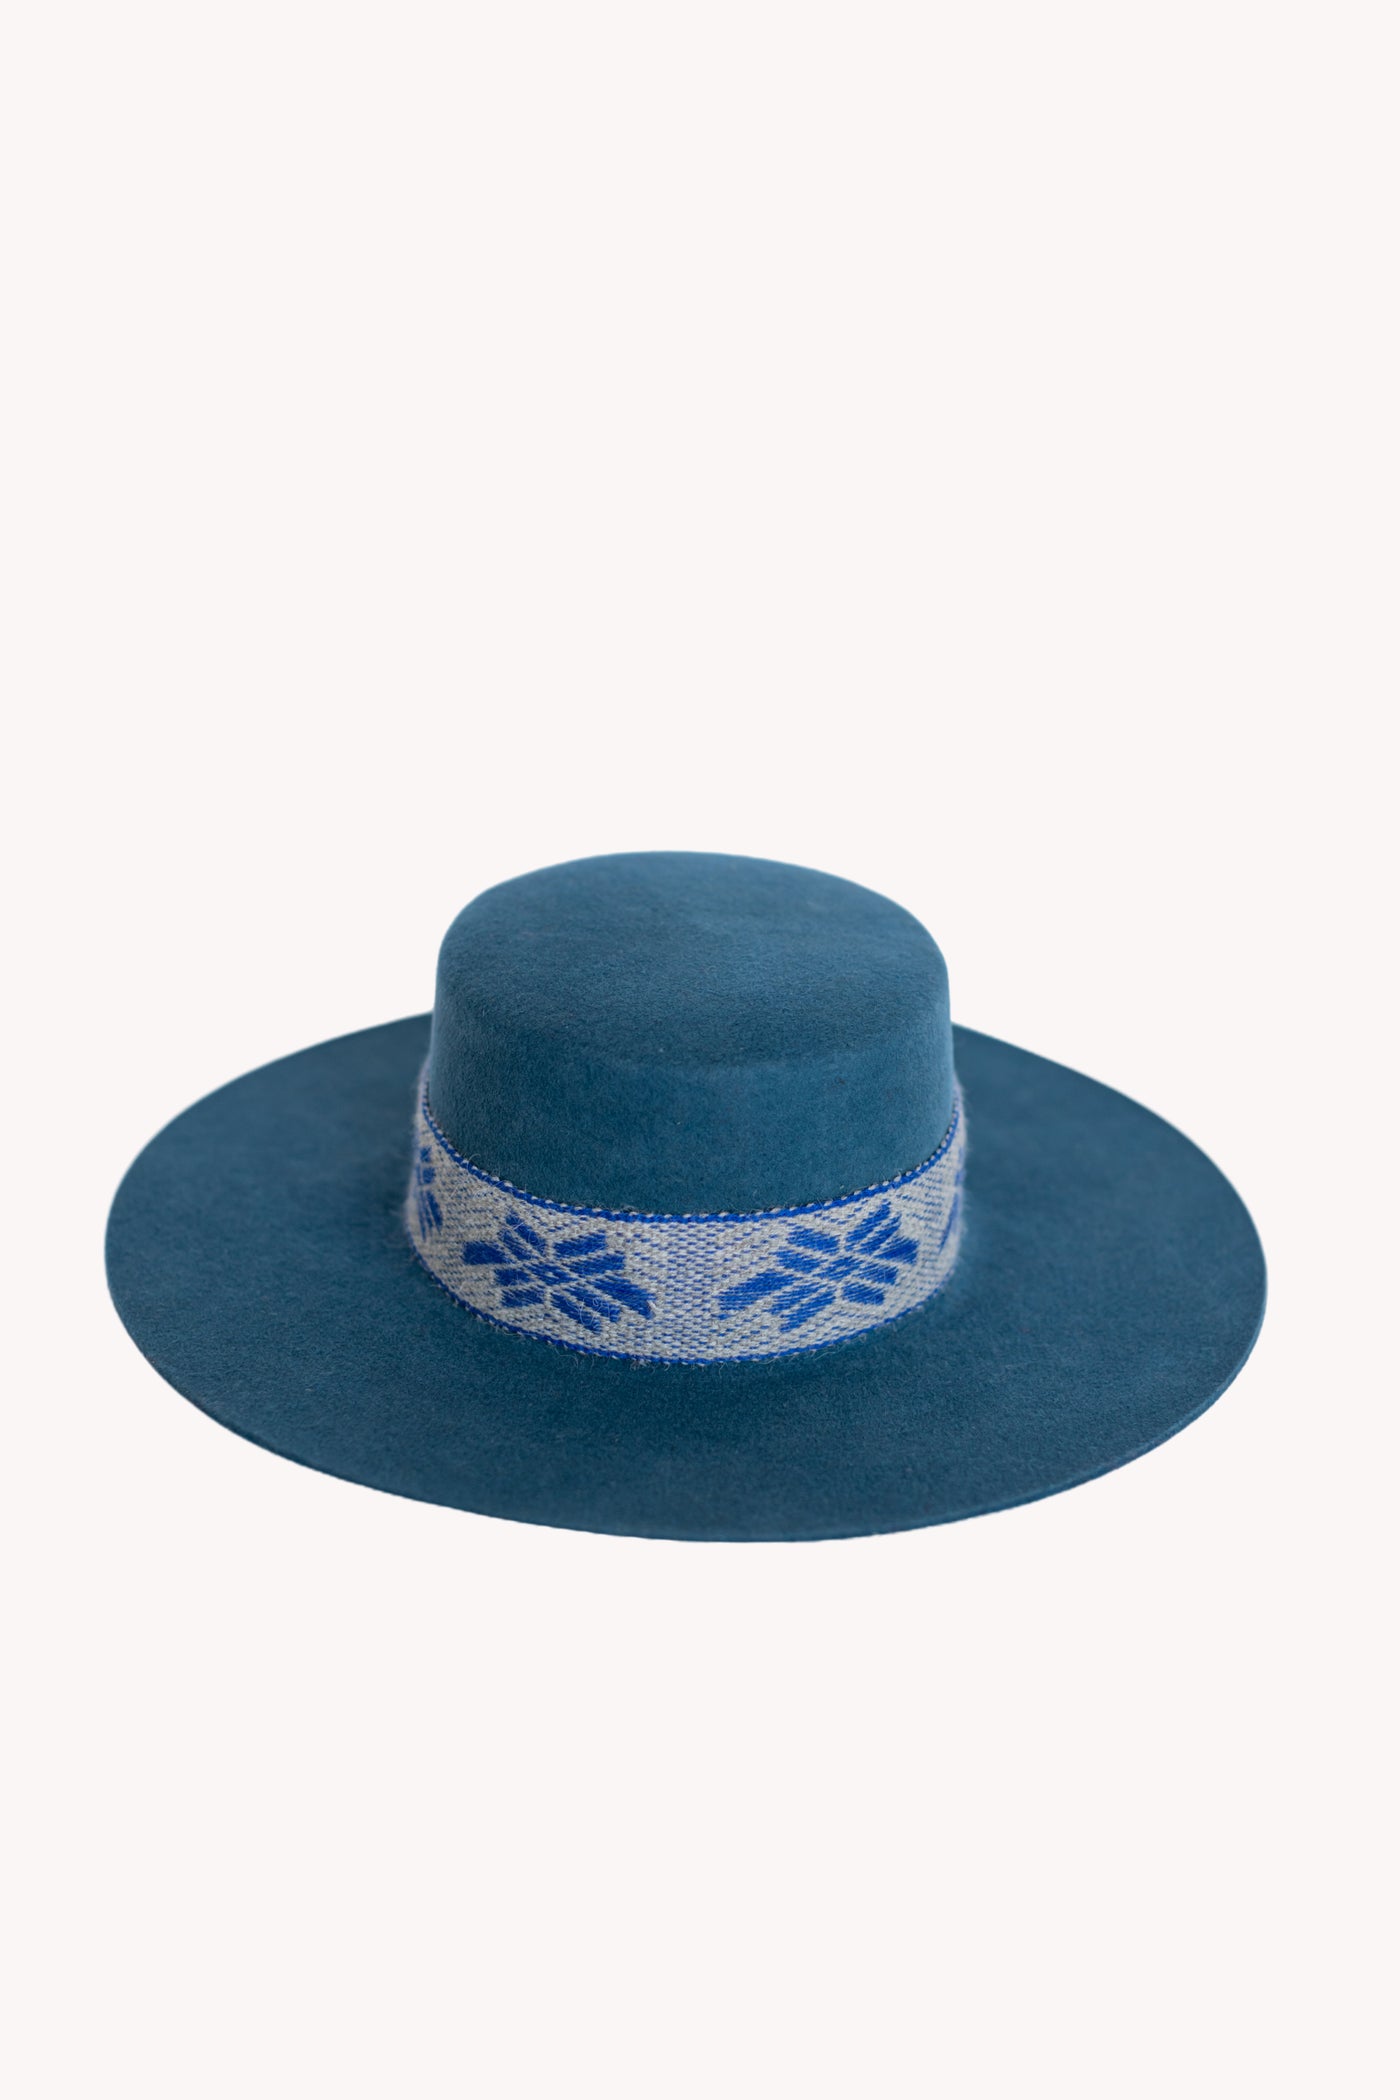 Blue Spanish style festival hat